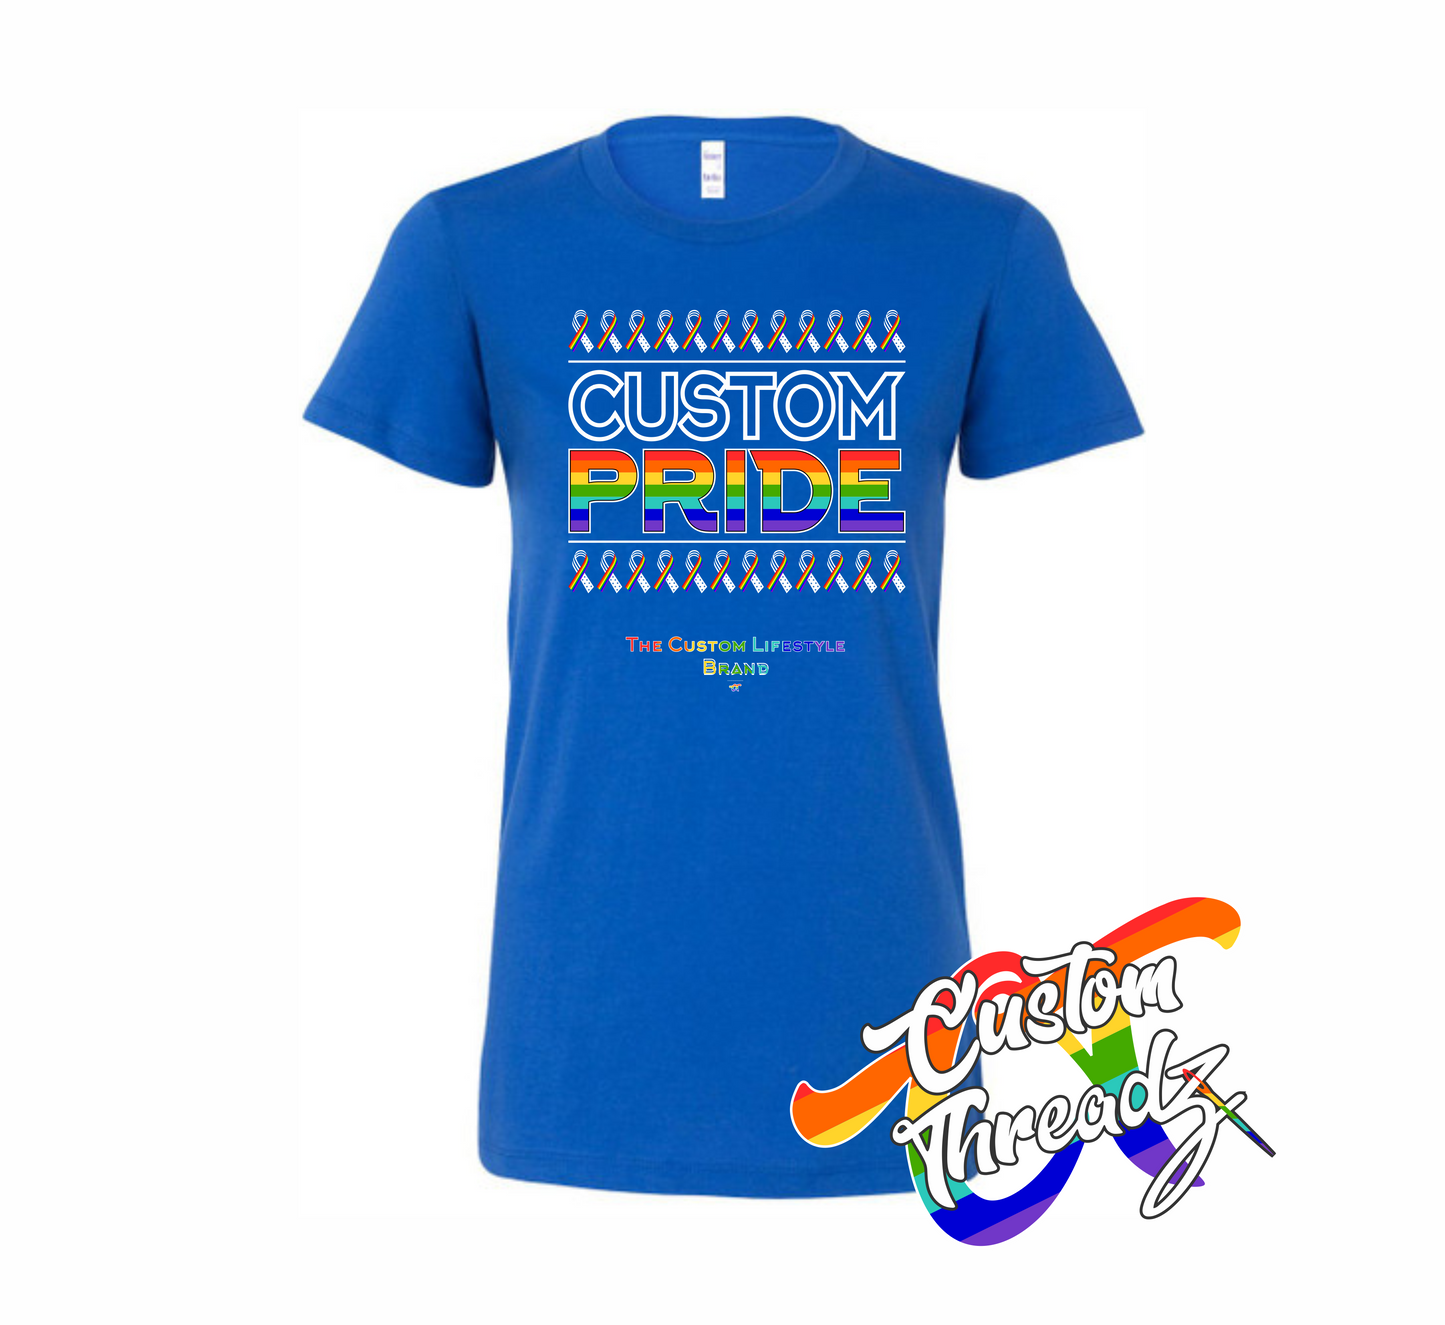 royal blue womens tee with custom pride rainbow DTG printed design